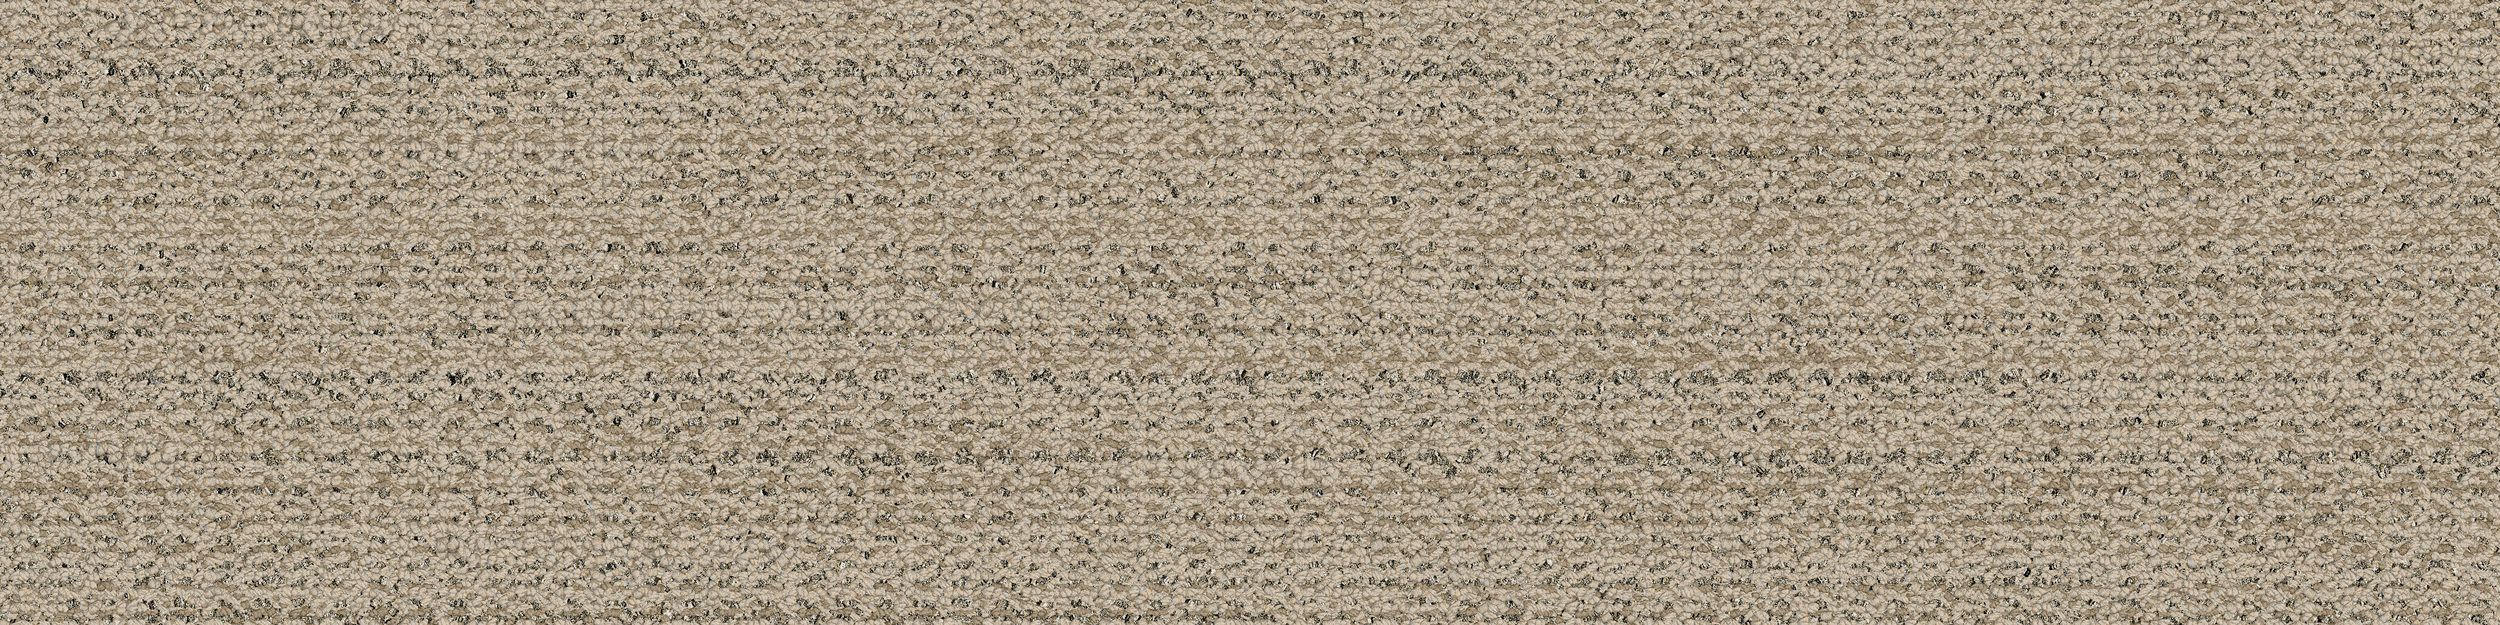 WW870 Carpet Tile In Raffia Weft numéro d’image 2